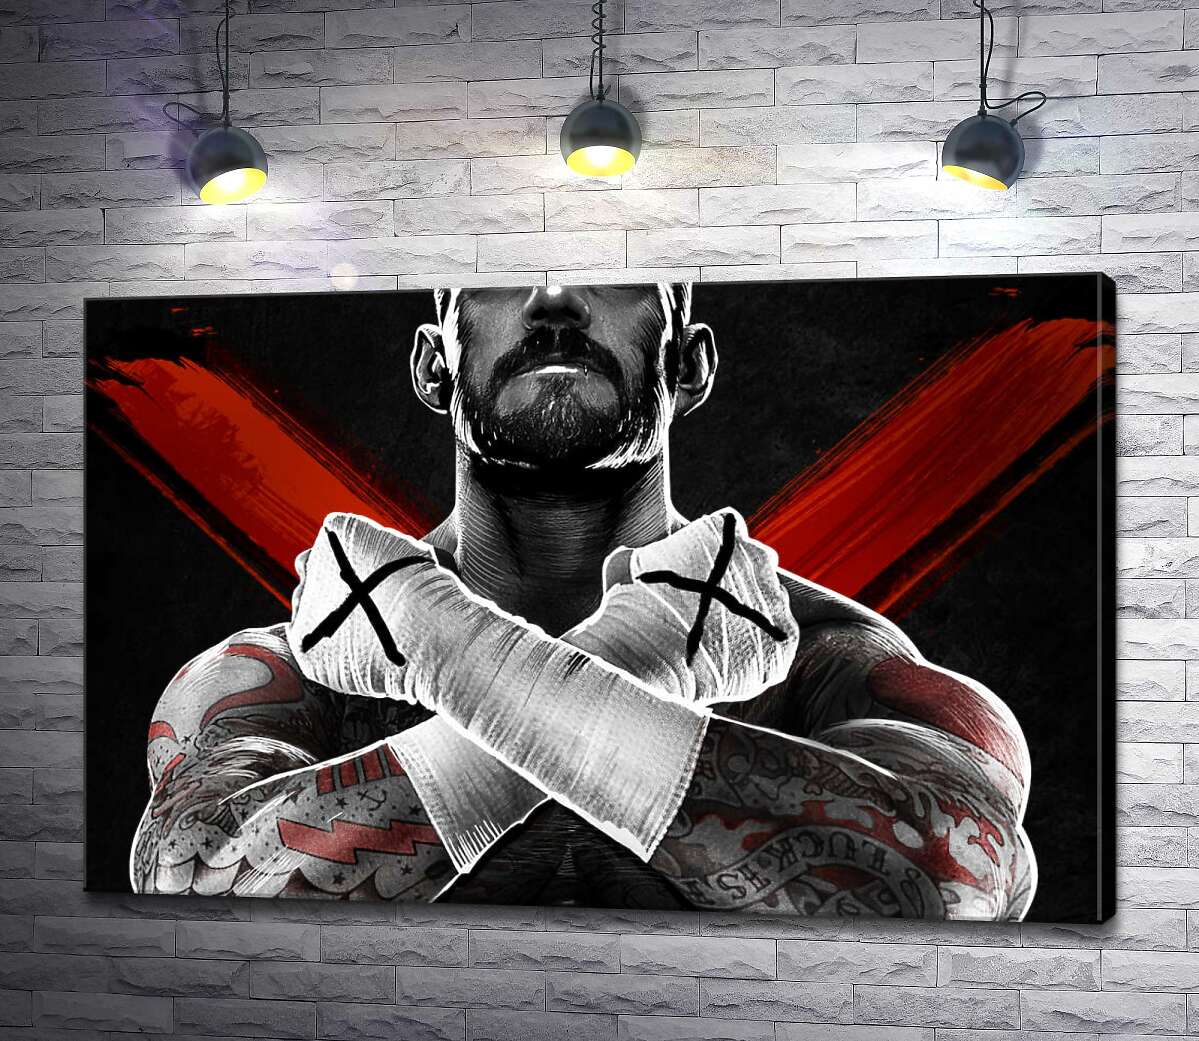 картина Гори м'язів американського реслера СМ Панка (CM Punk)